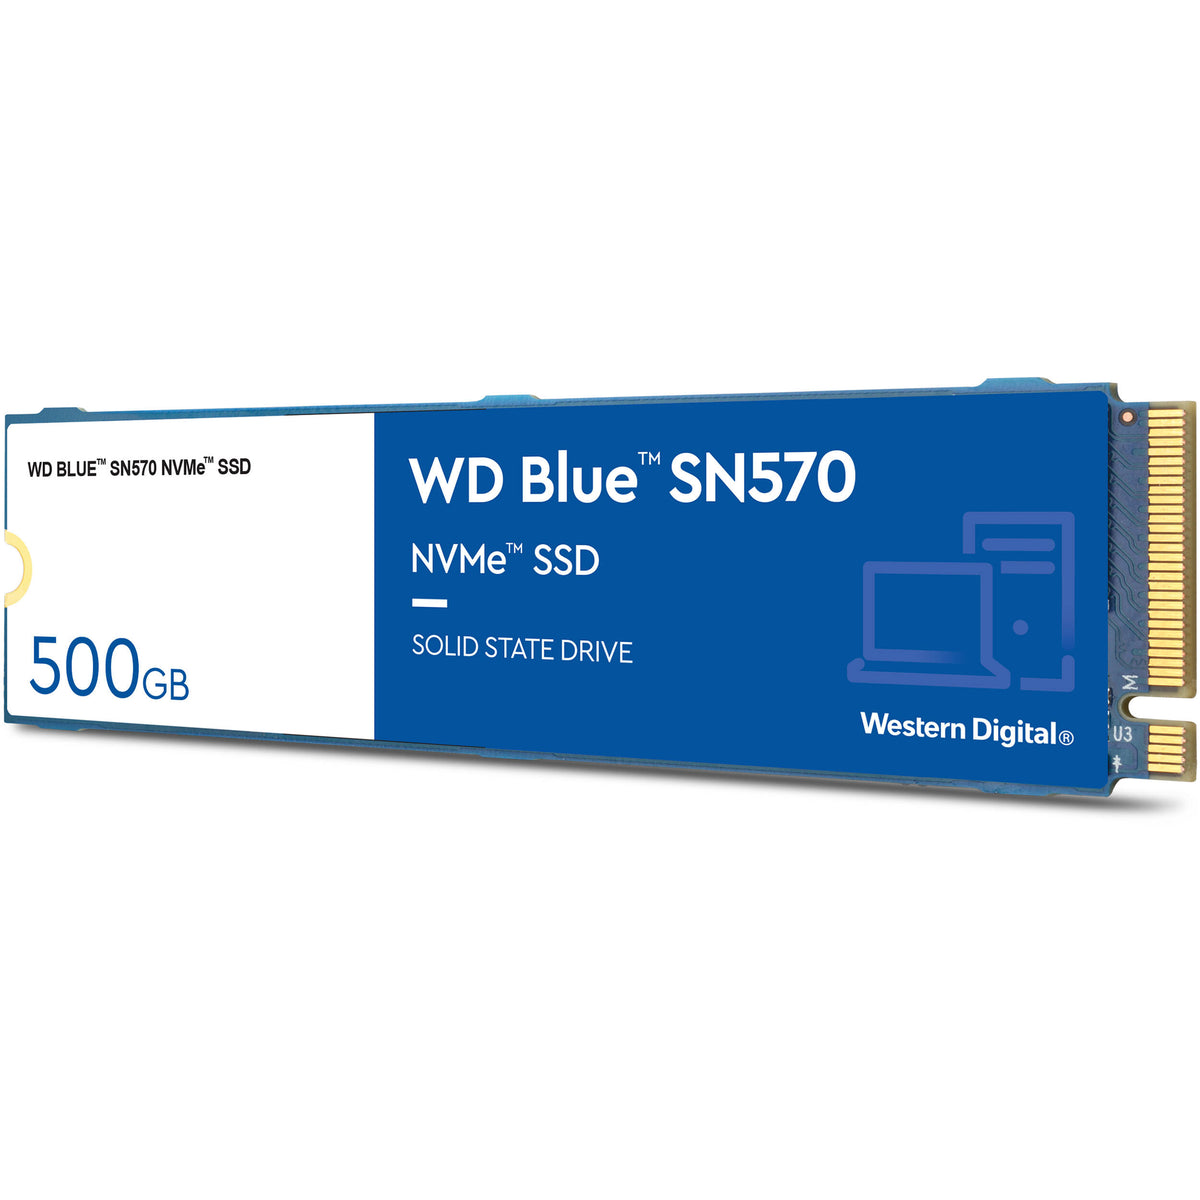 WD BLUE SN570 NVME SSD 500GB INT